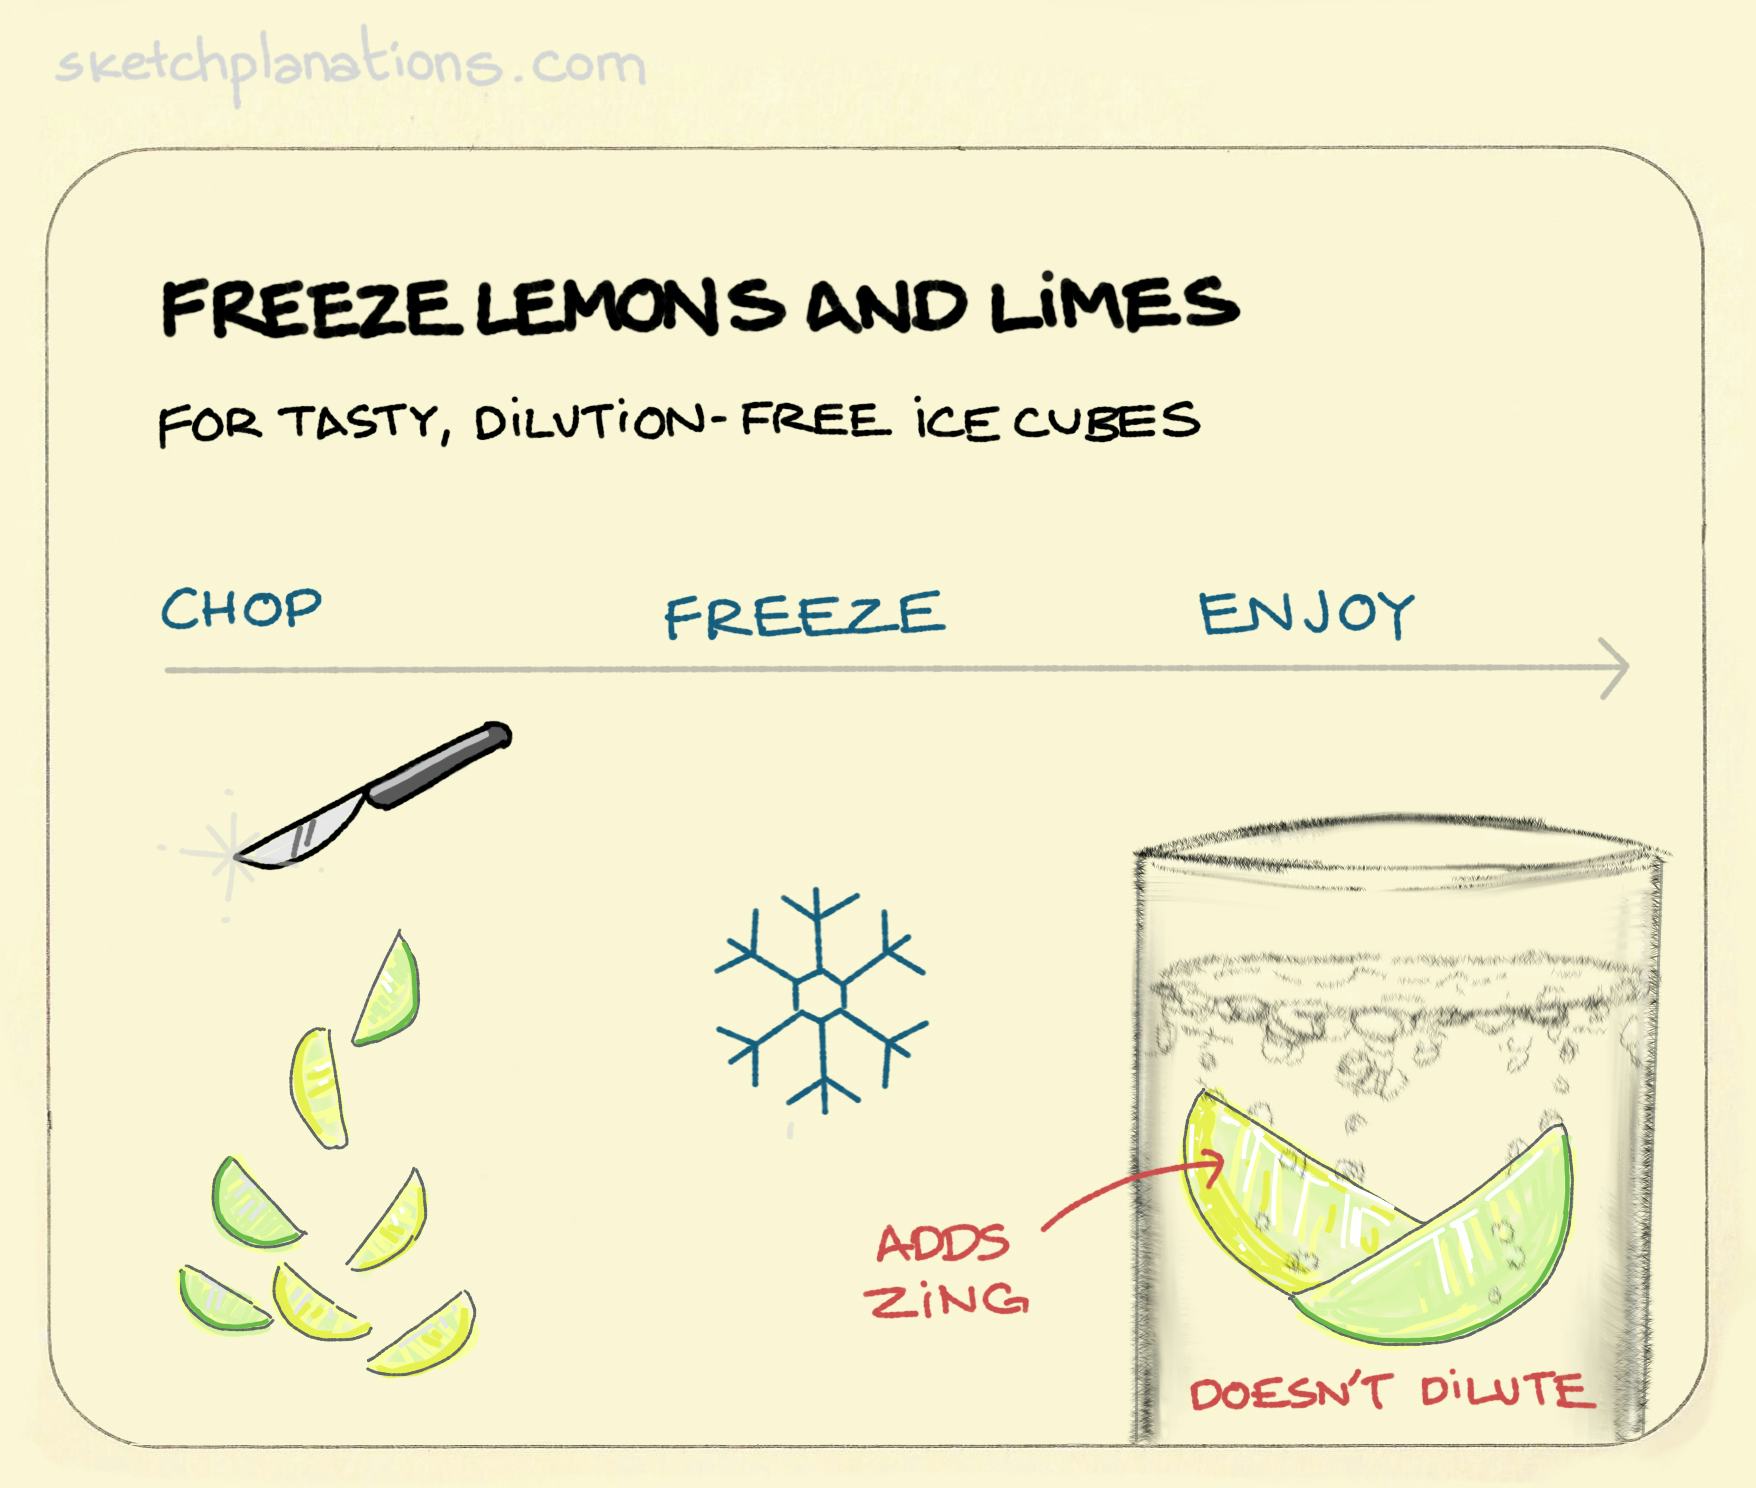 Freeze lemons and limes - Sketchplanations